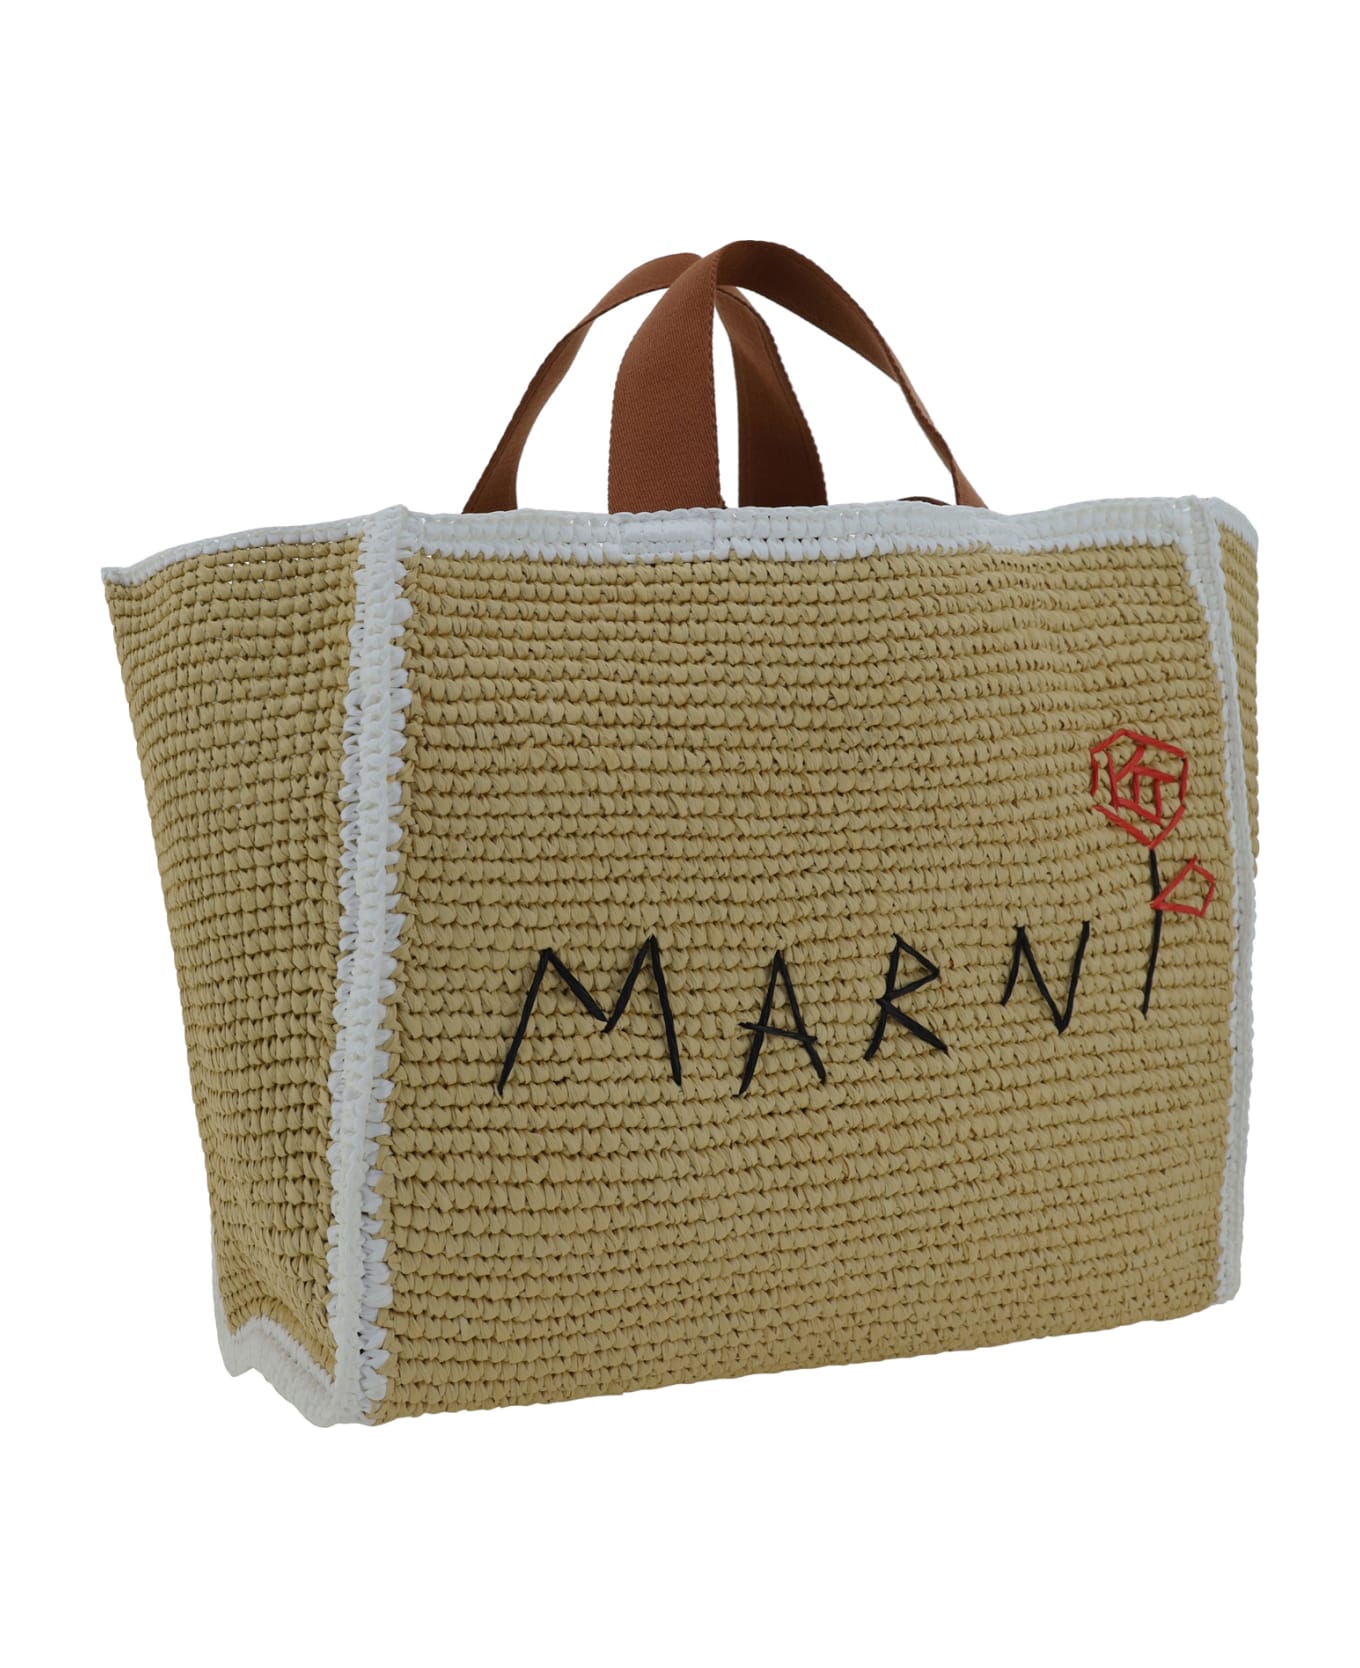 Marni Tote Sillo Medium Handbag - Natural/white/rust